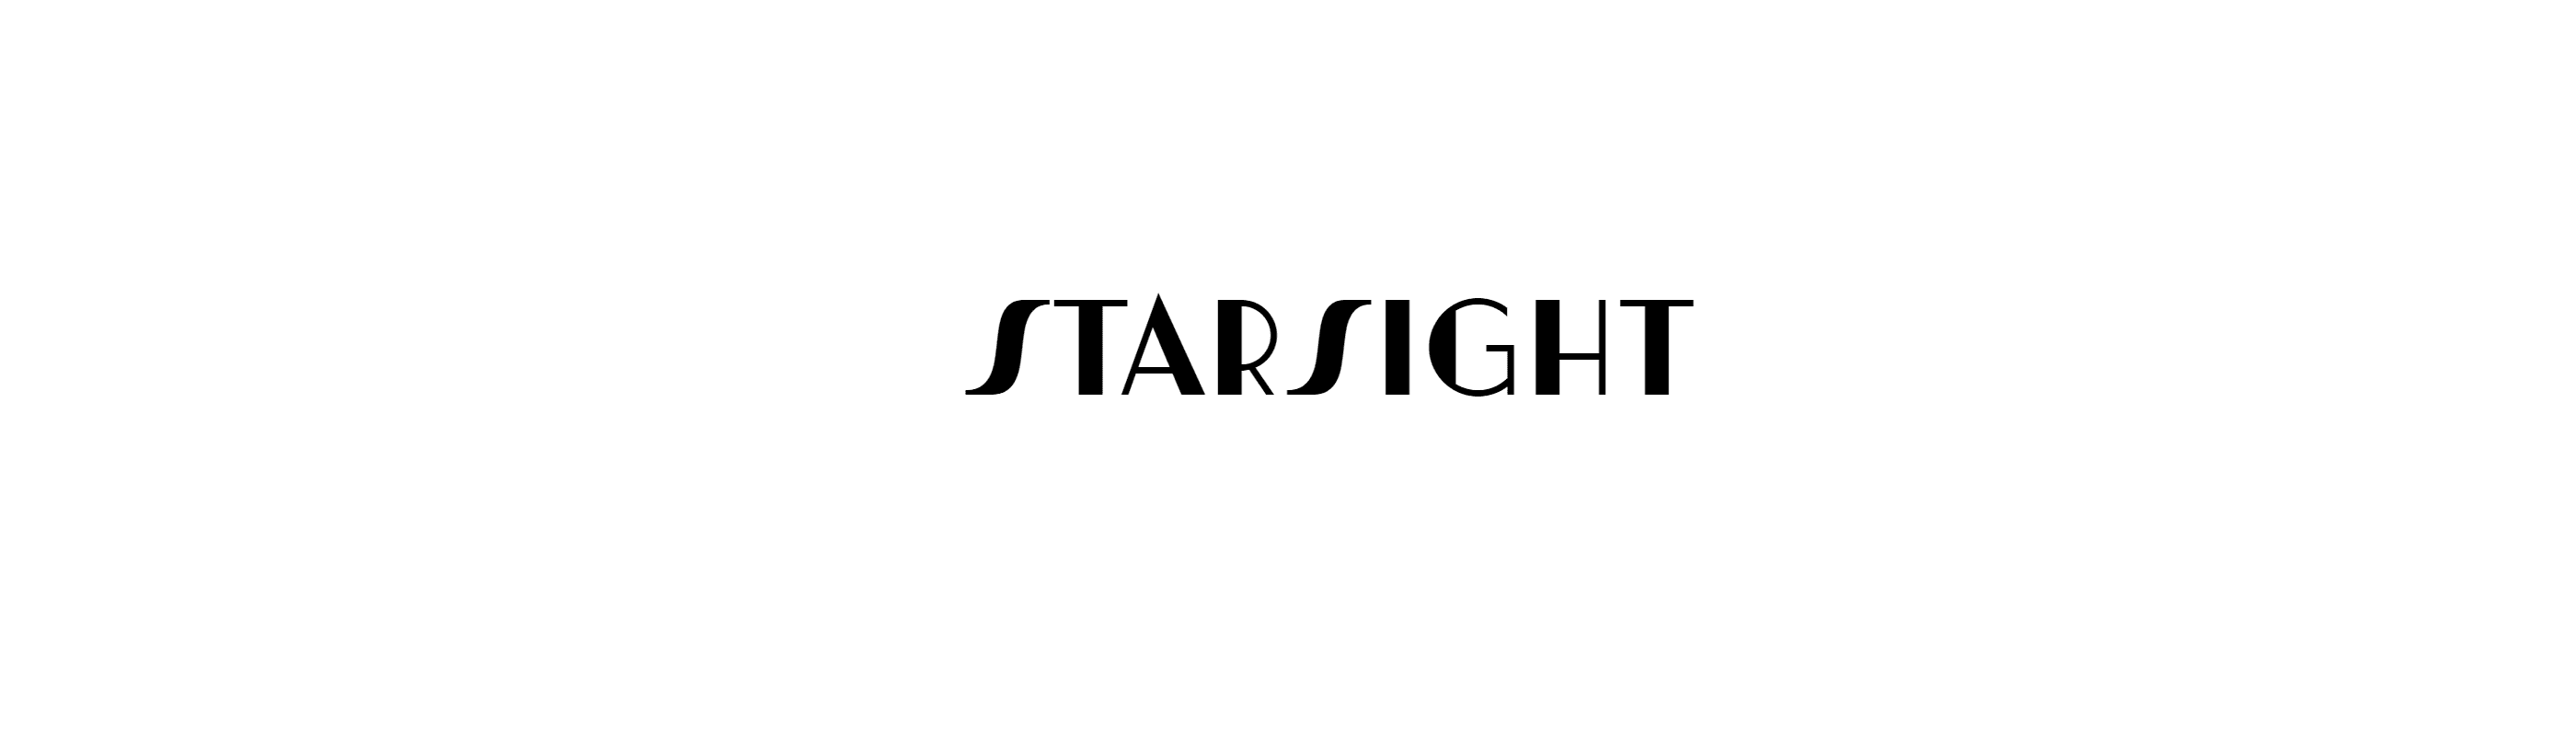 starsight 横幅